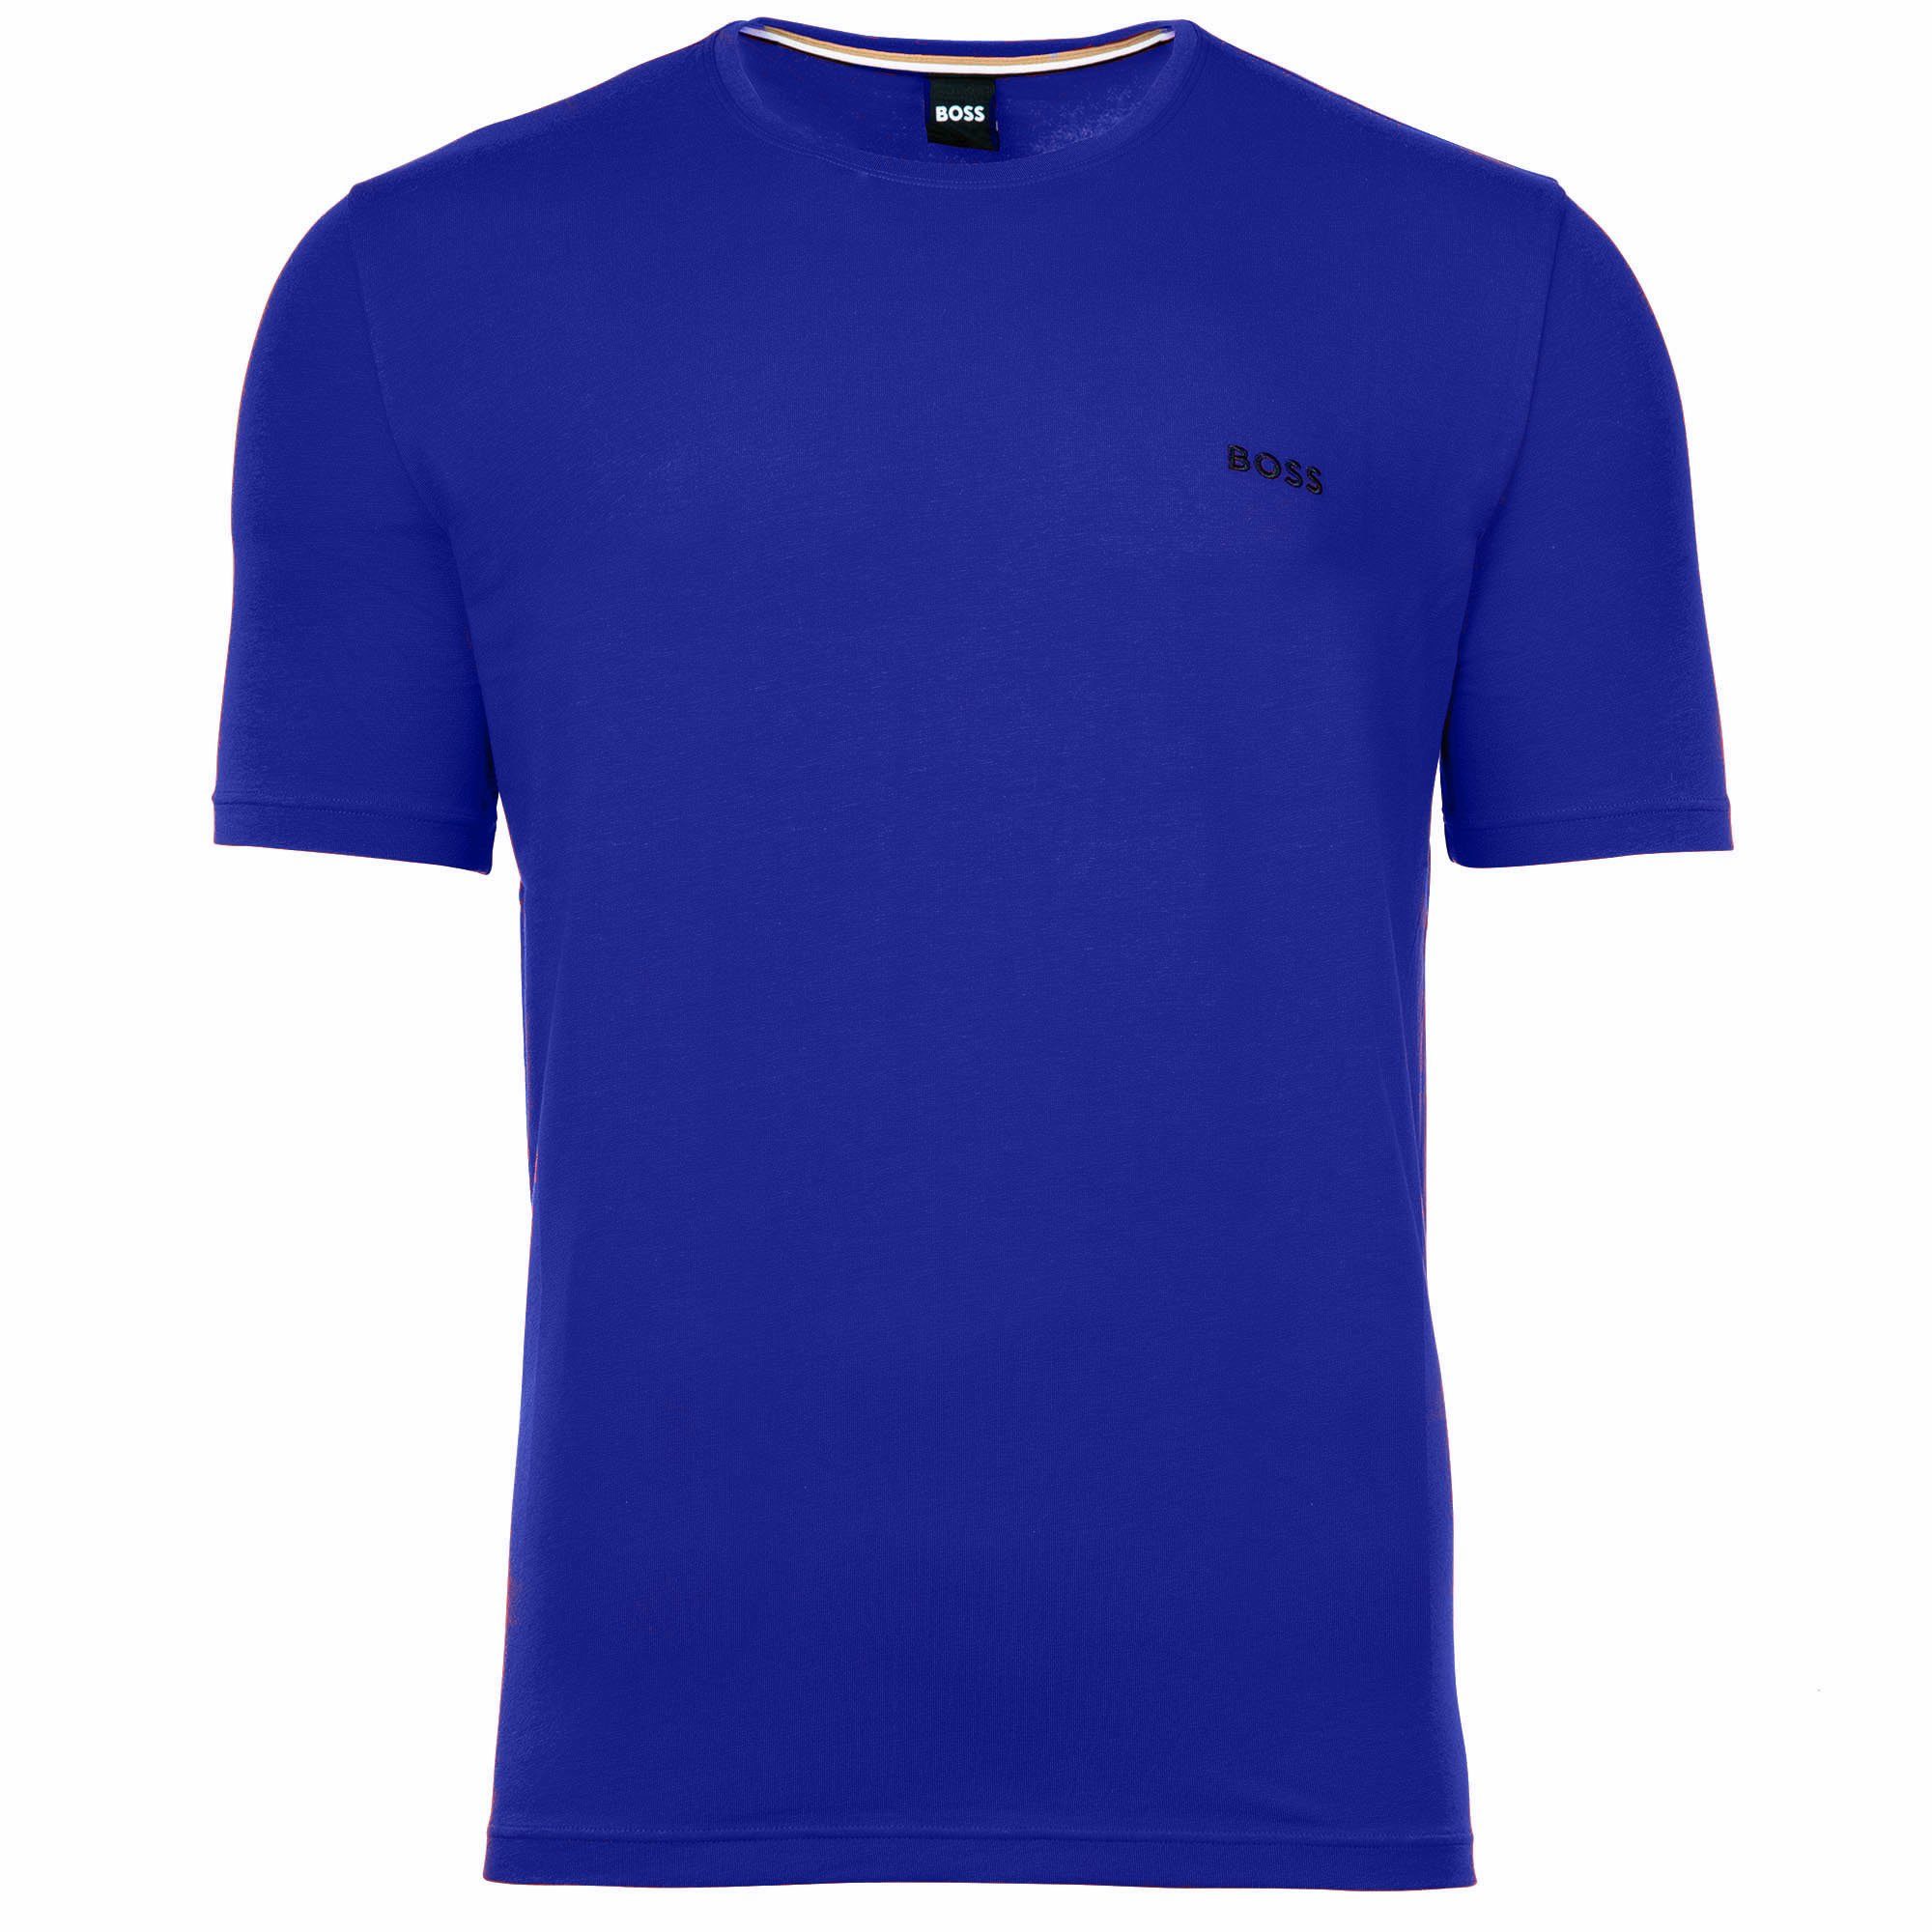 BOSS T-Shirt Herren T-Shirt - Mix & Match, Rundhals, Baumwolle Blau (Bright Blue)